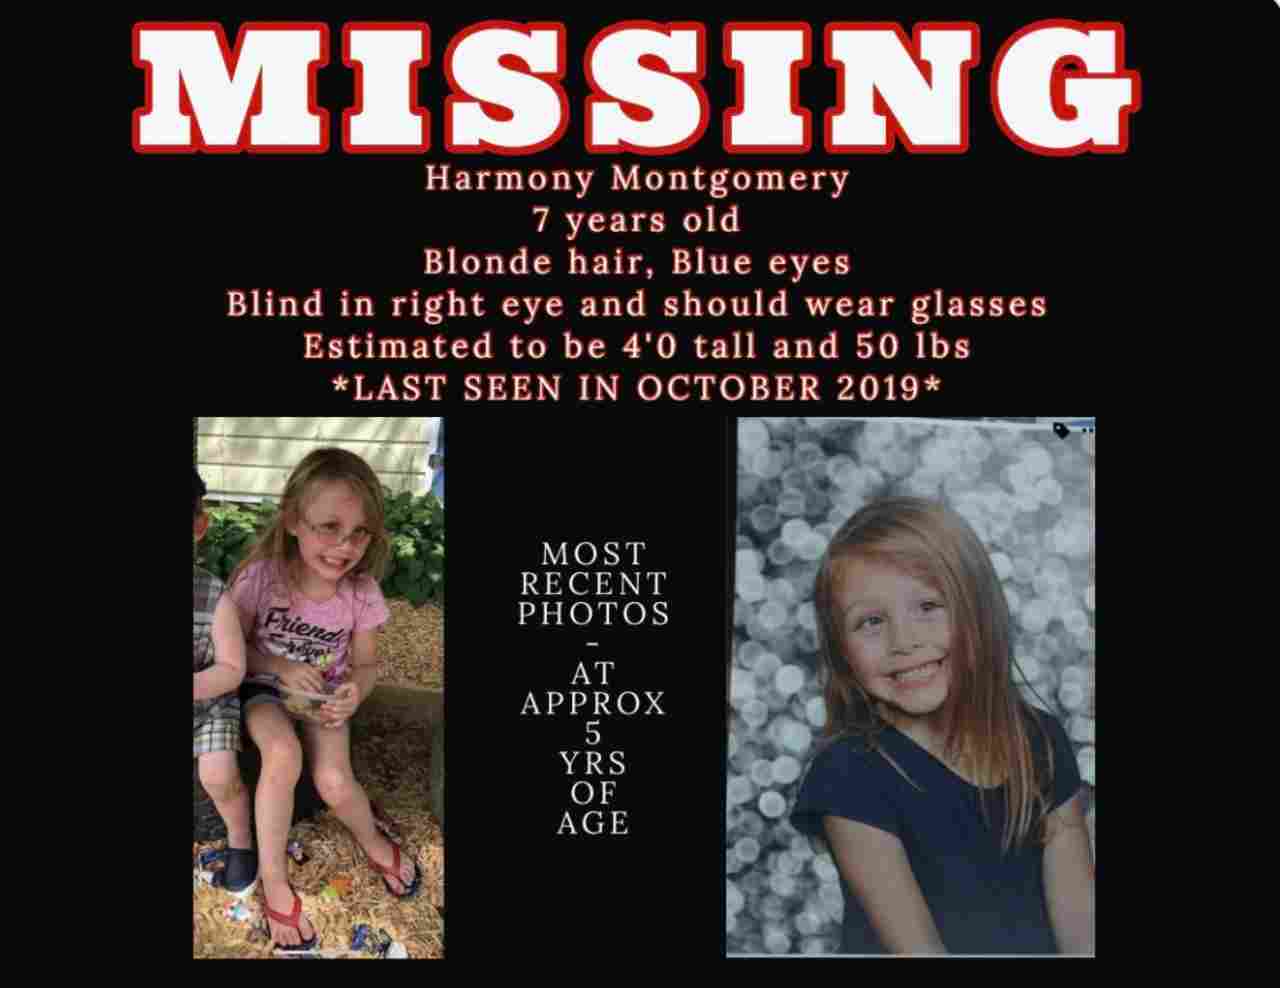 Harmony Montgomery bambina ipovedente scomparsa